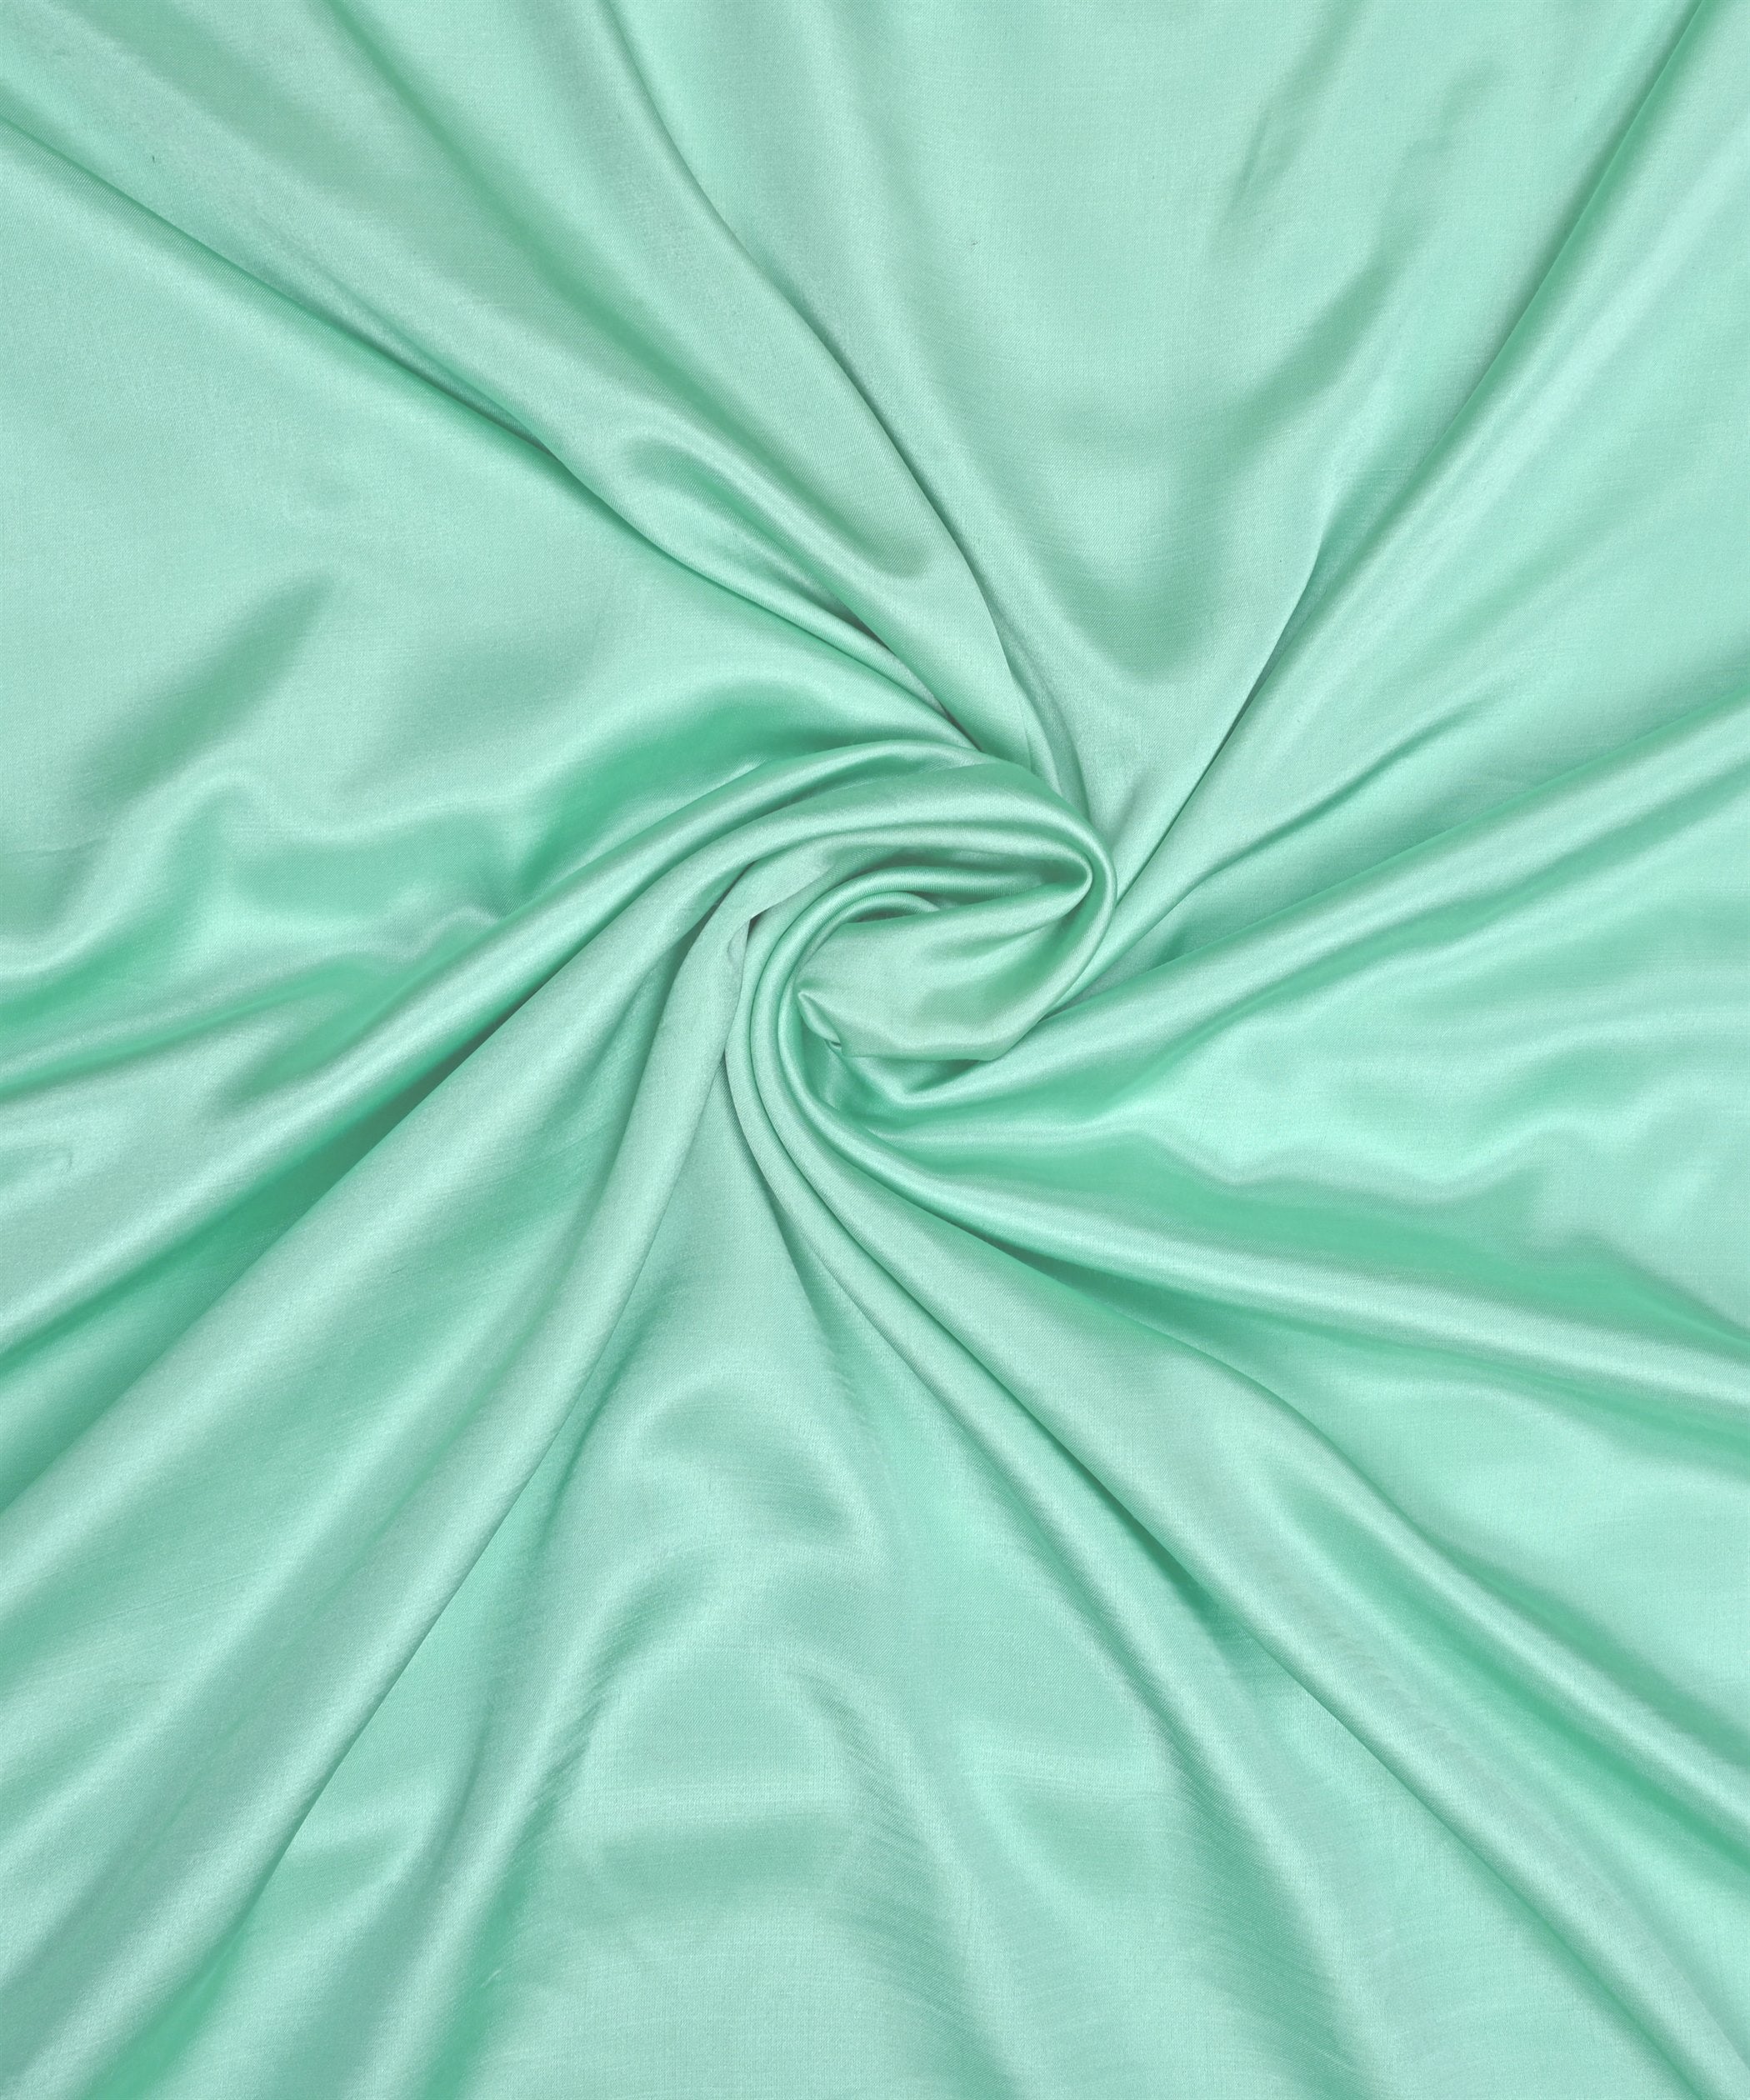 Glossy Green Plain Dyed Modal Satin Fabric